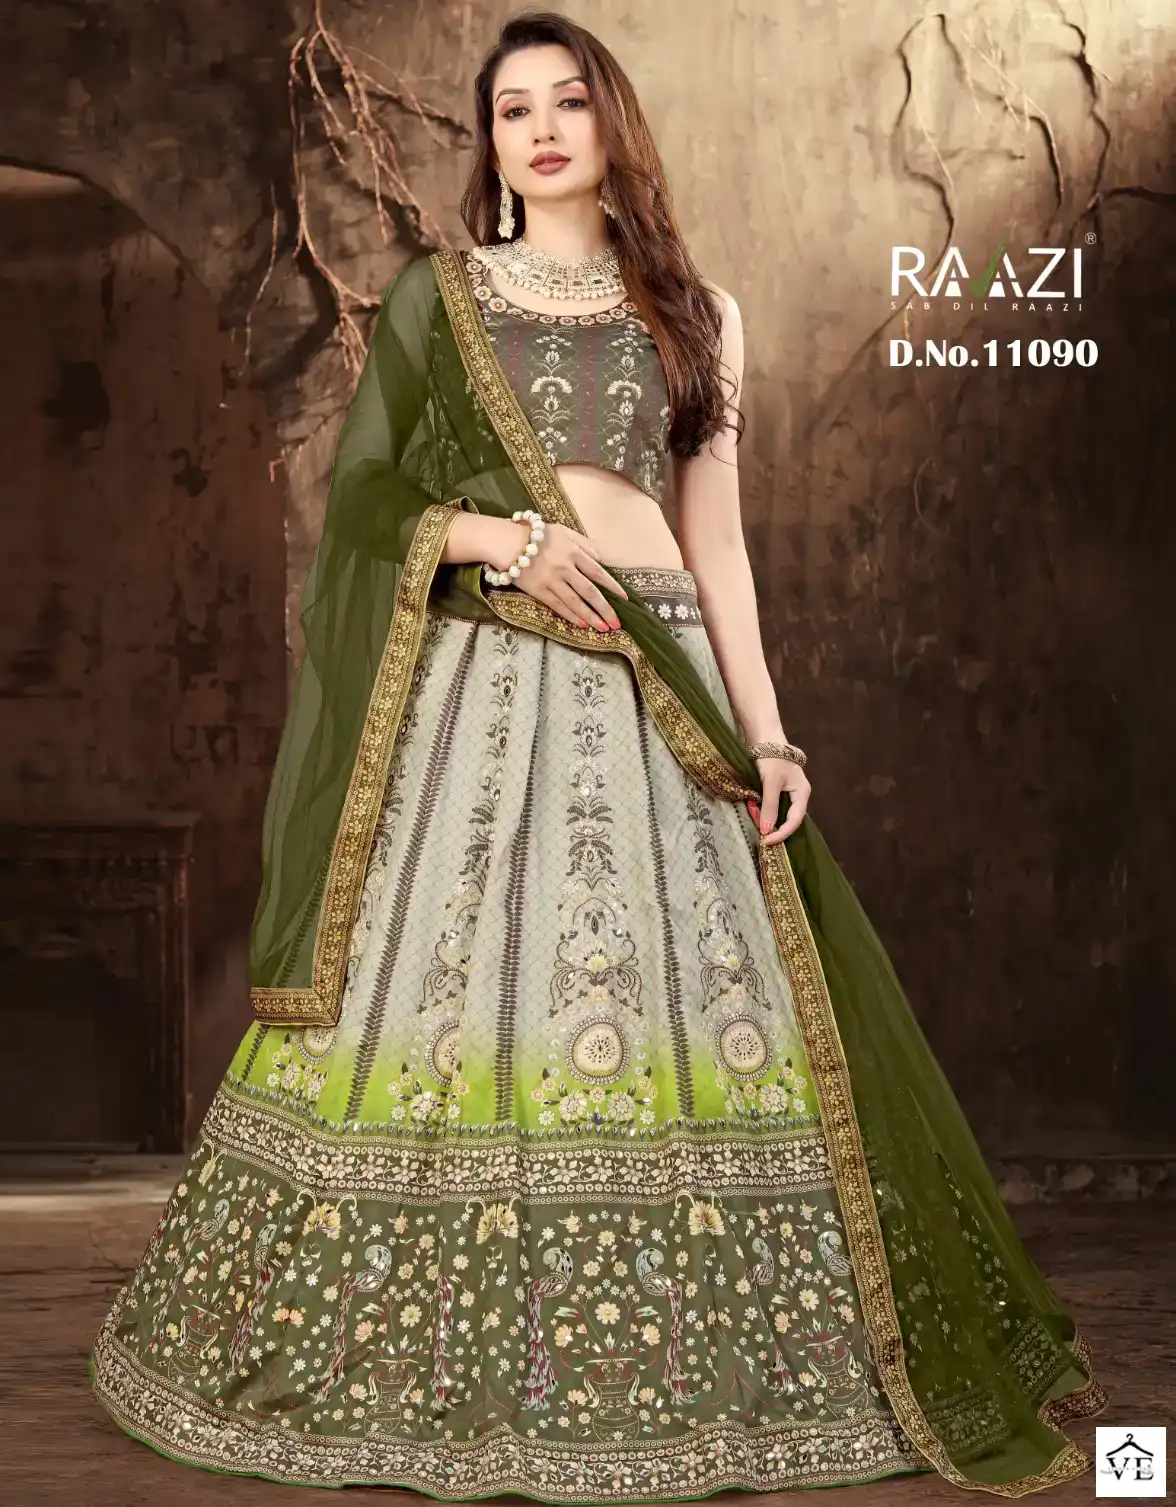 GIRLY VOL 18 Bridal Look Lehengha Choli In Light Rama Green Color By  SHUBHKALA